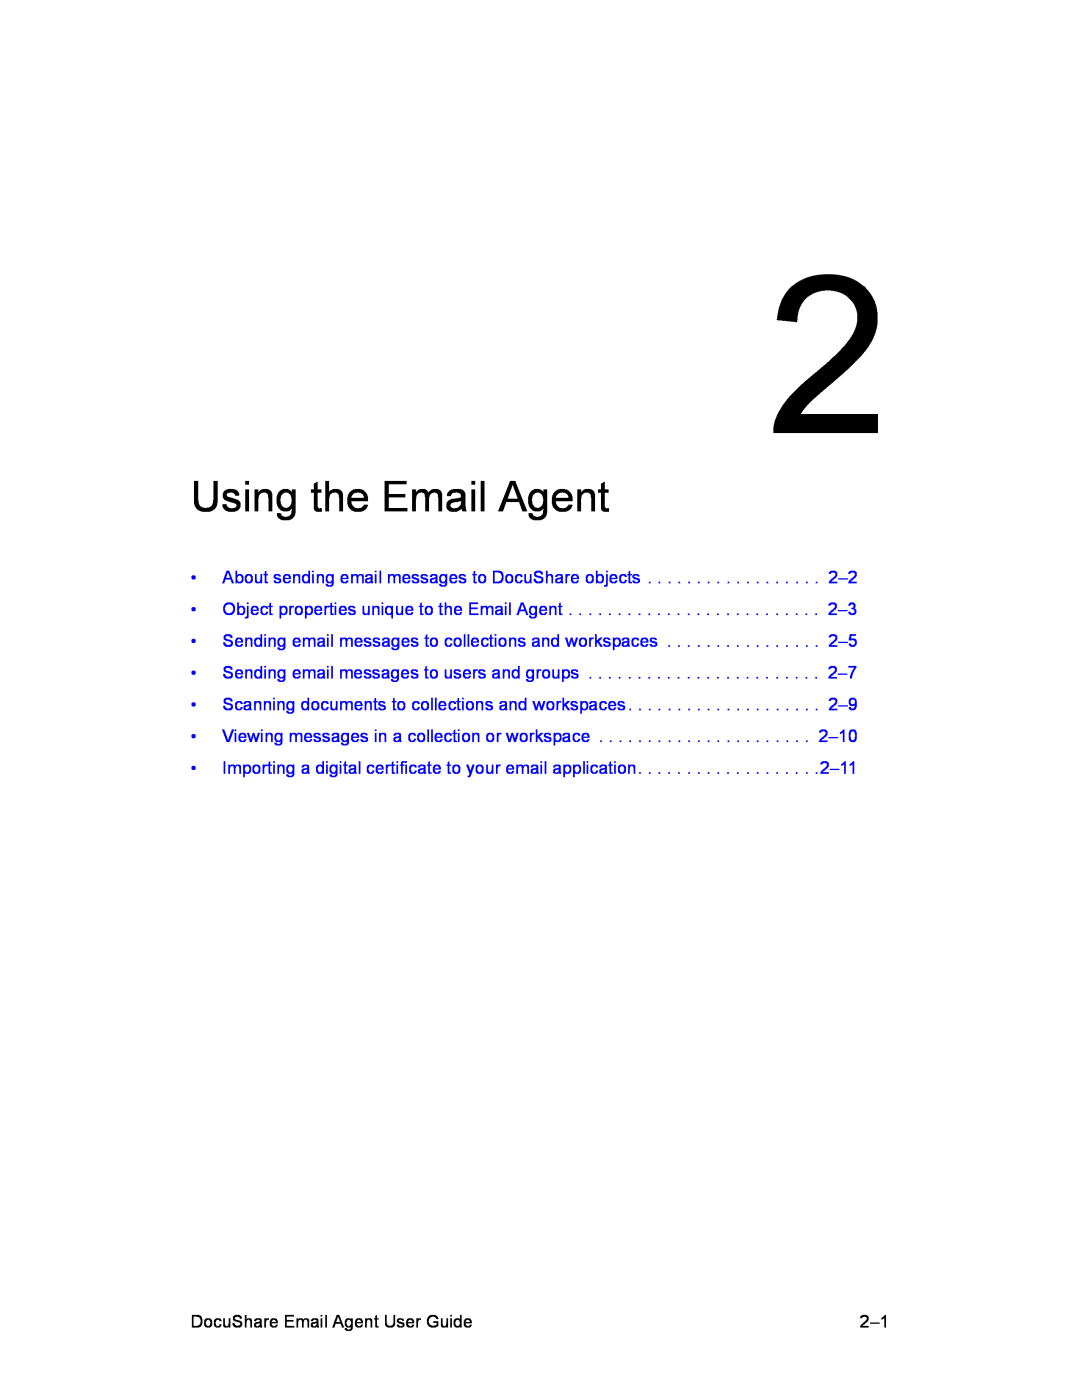 Xerox DocuShare 6.0 manual Using the Email Agent, DocuShare Email Agent User Guide 